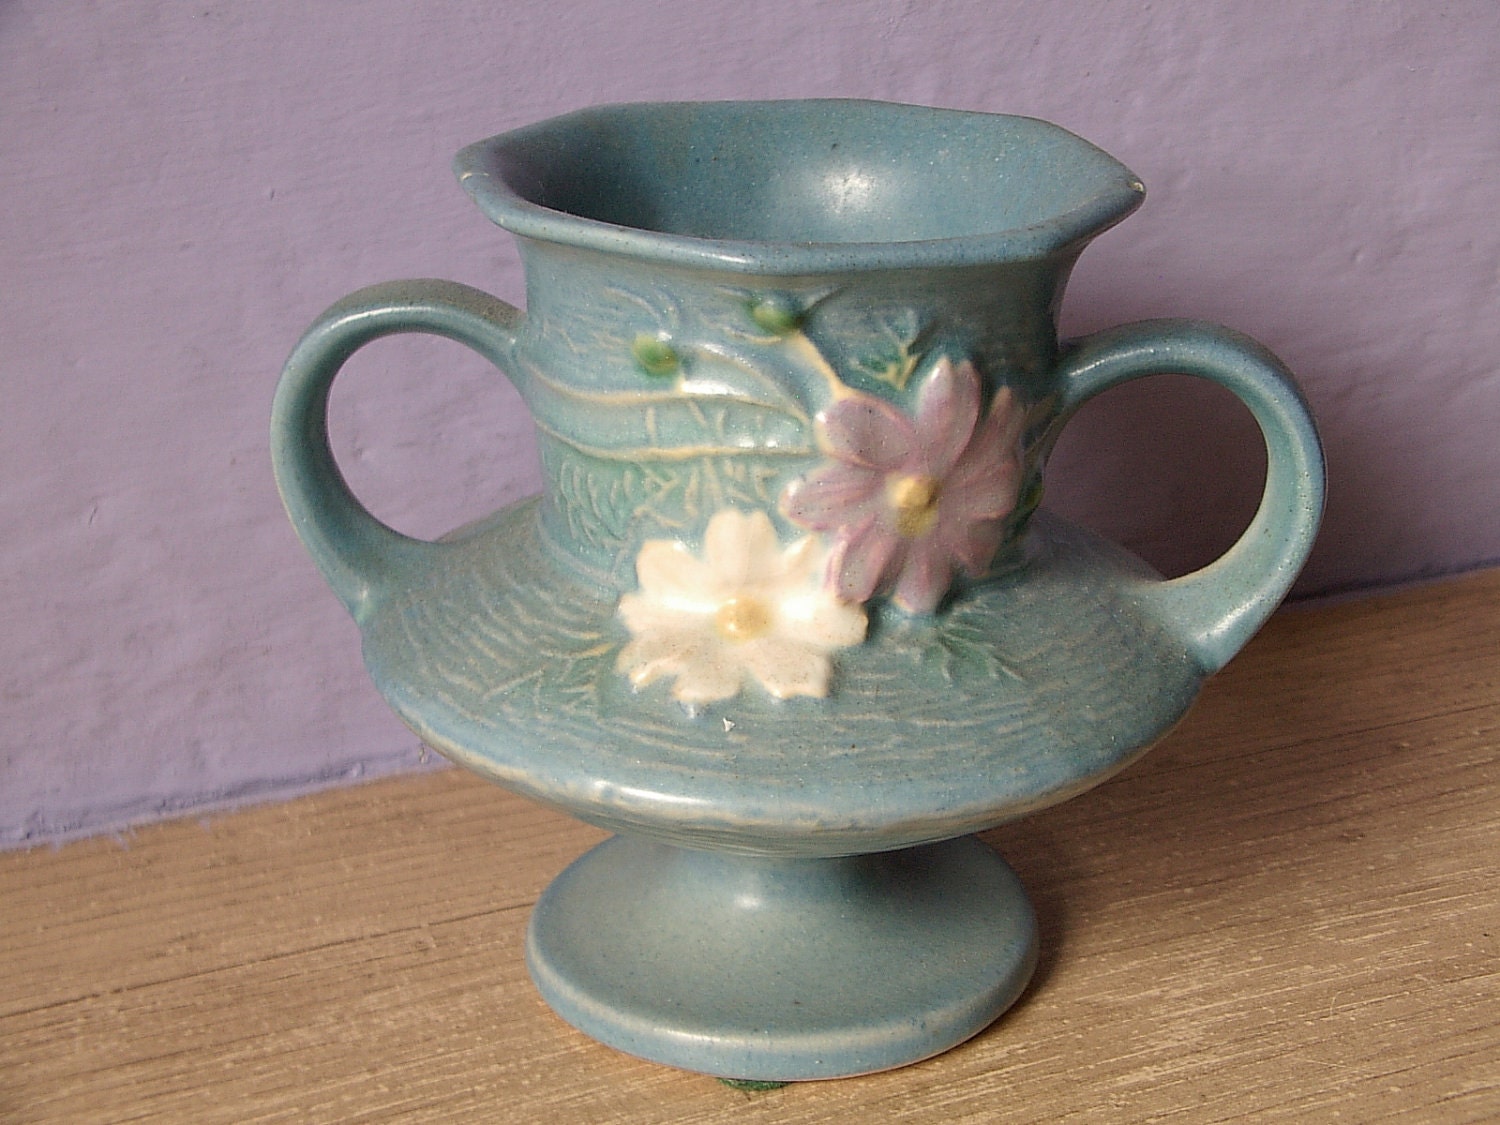 Vintage 1940's Roseville pottery blue cosmos vase by ShoponSherman